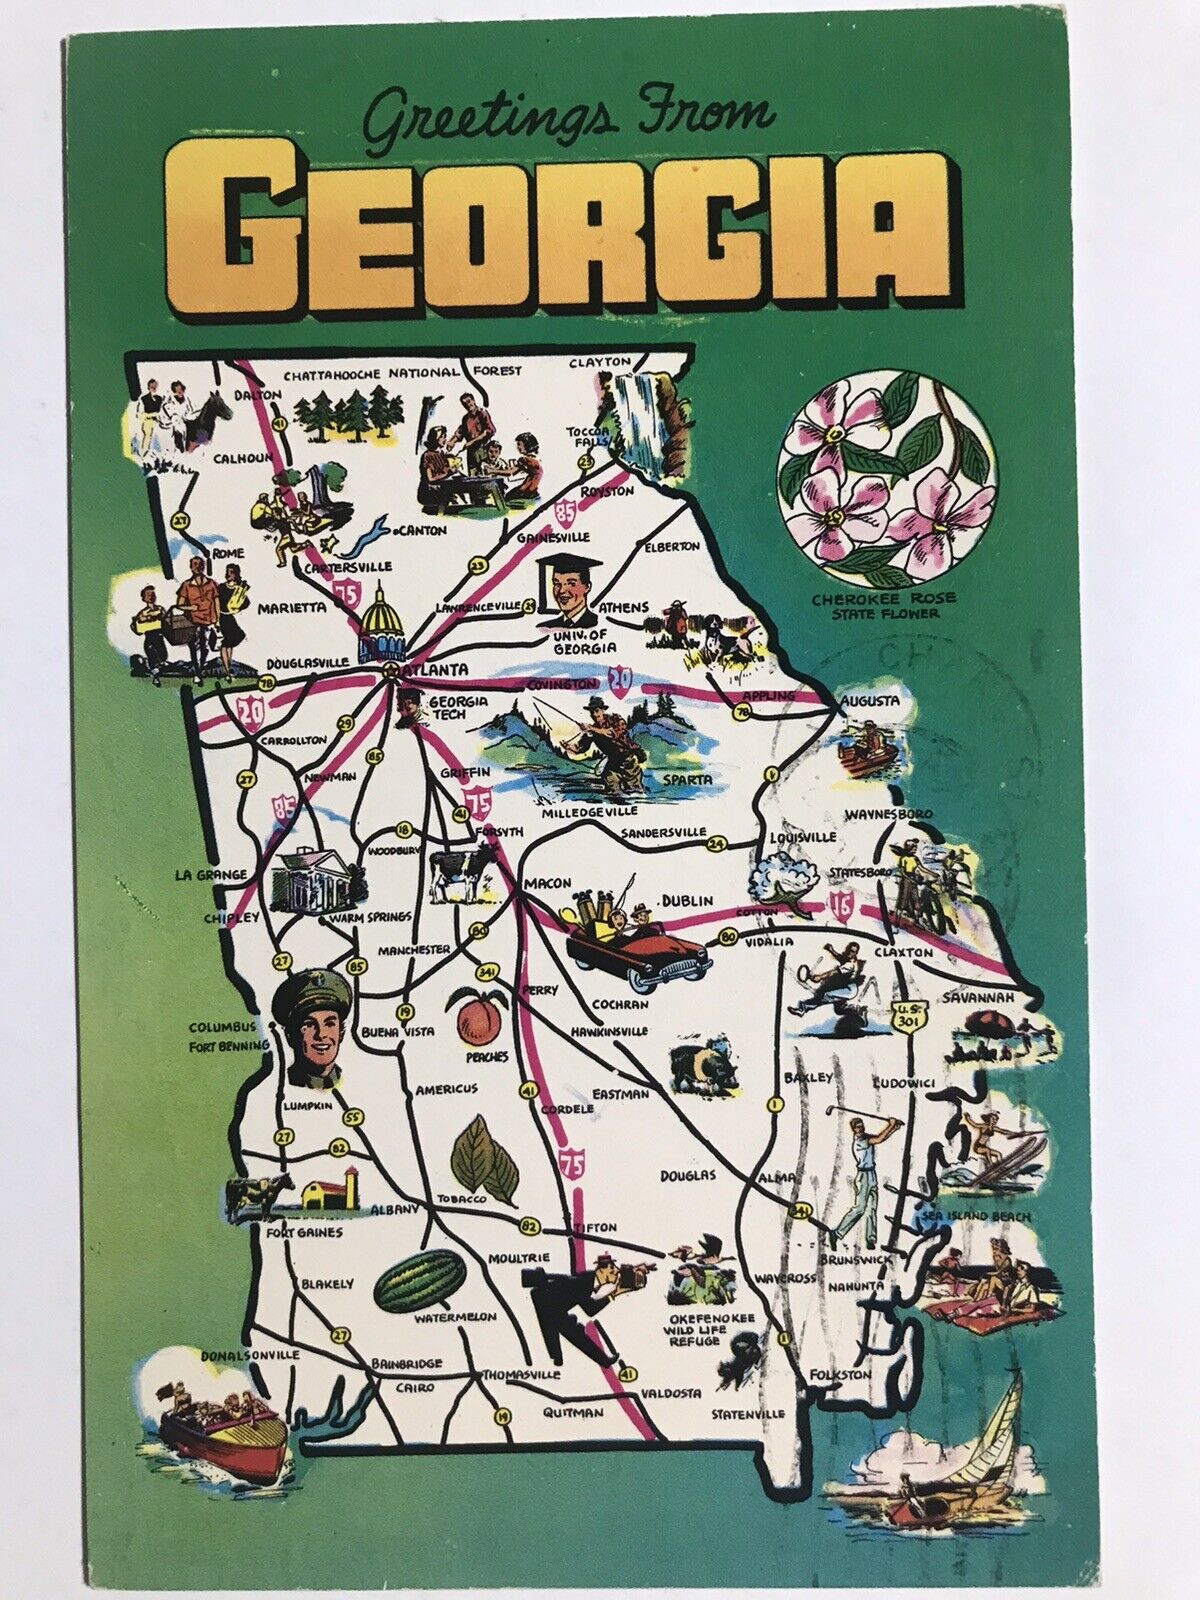 1970 Greetings From Georgia Postcard